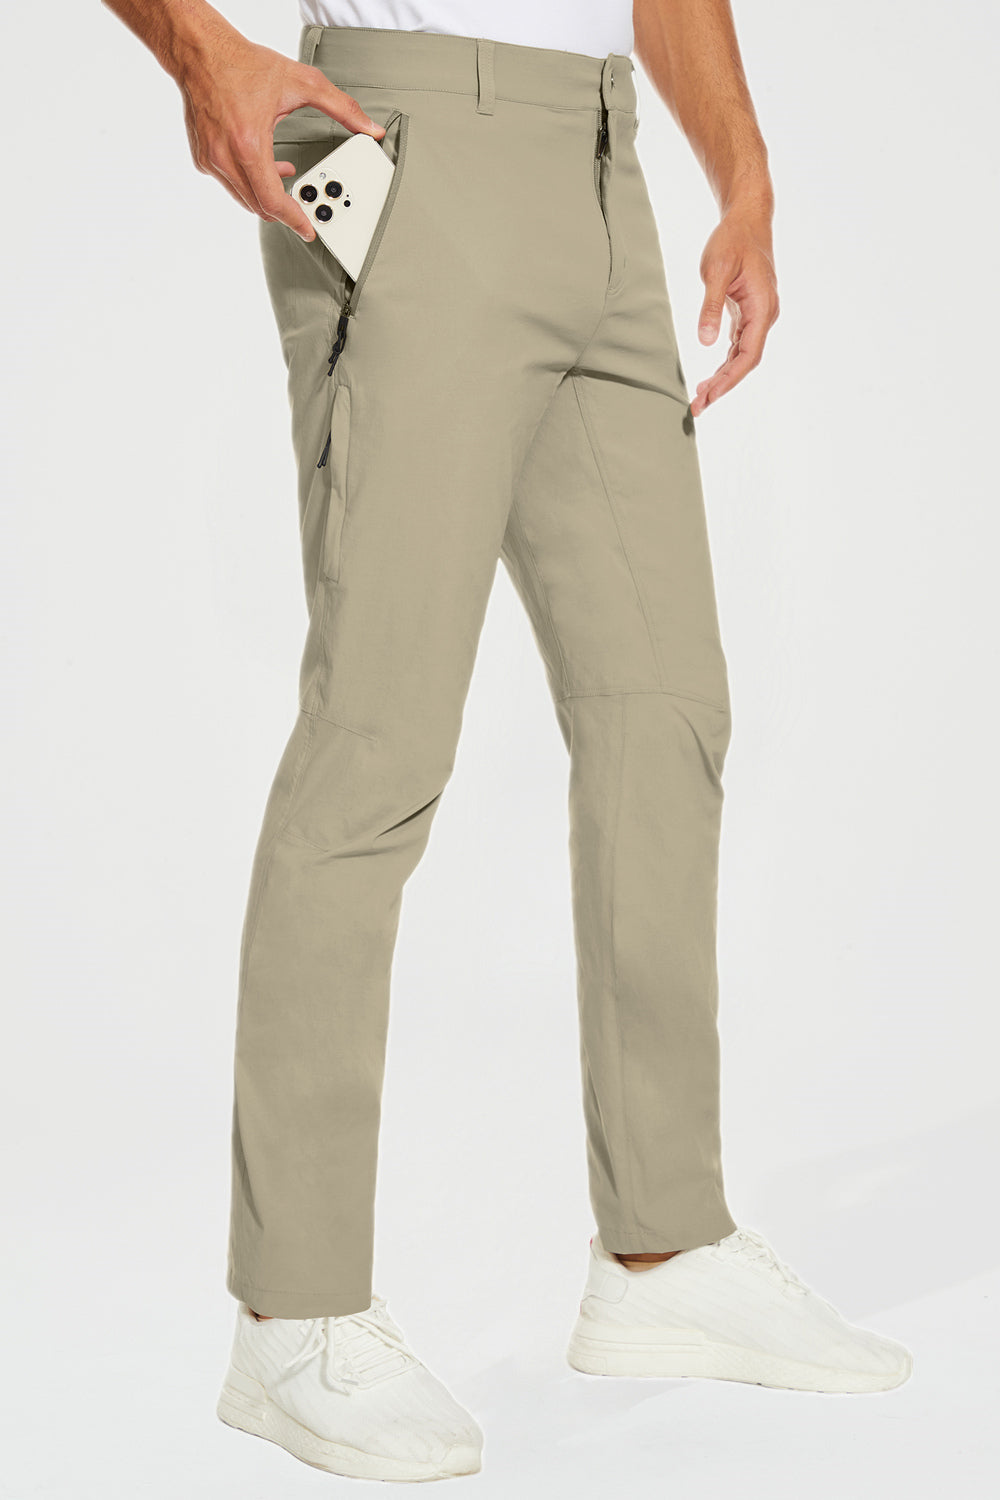 PULI Men's Stretch Golf Pants with Cargo Pockets Waterproof Slim